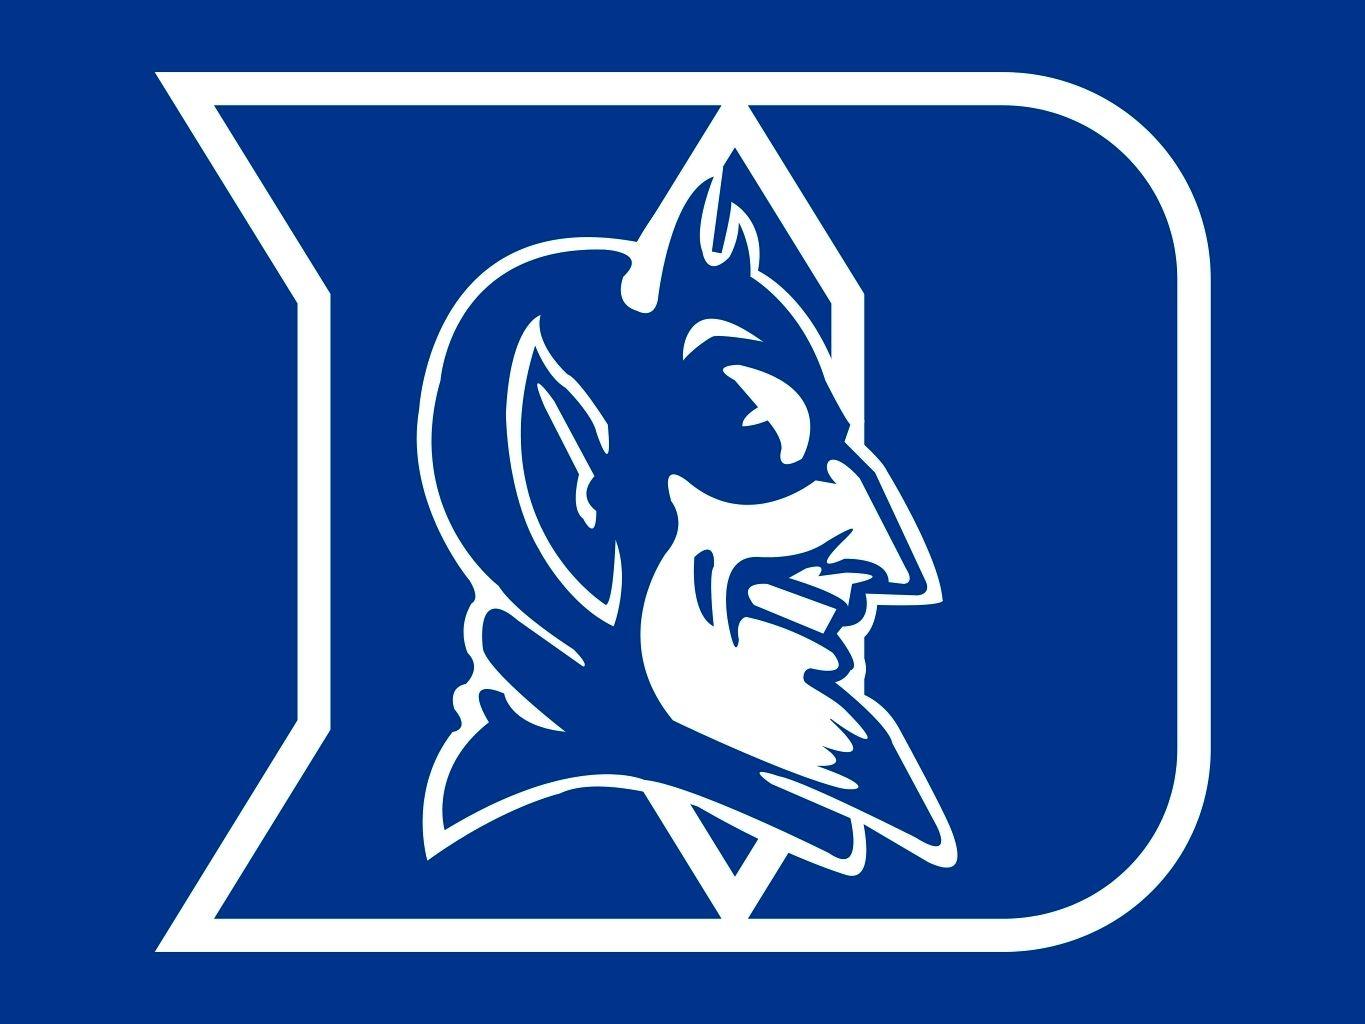 Duke Football Logo - Duke Blue Devils | NCAA Football Wiki | FANDOM powered by Wikia